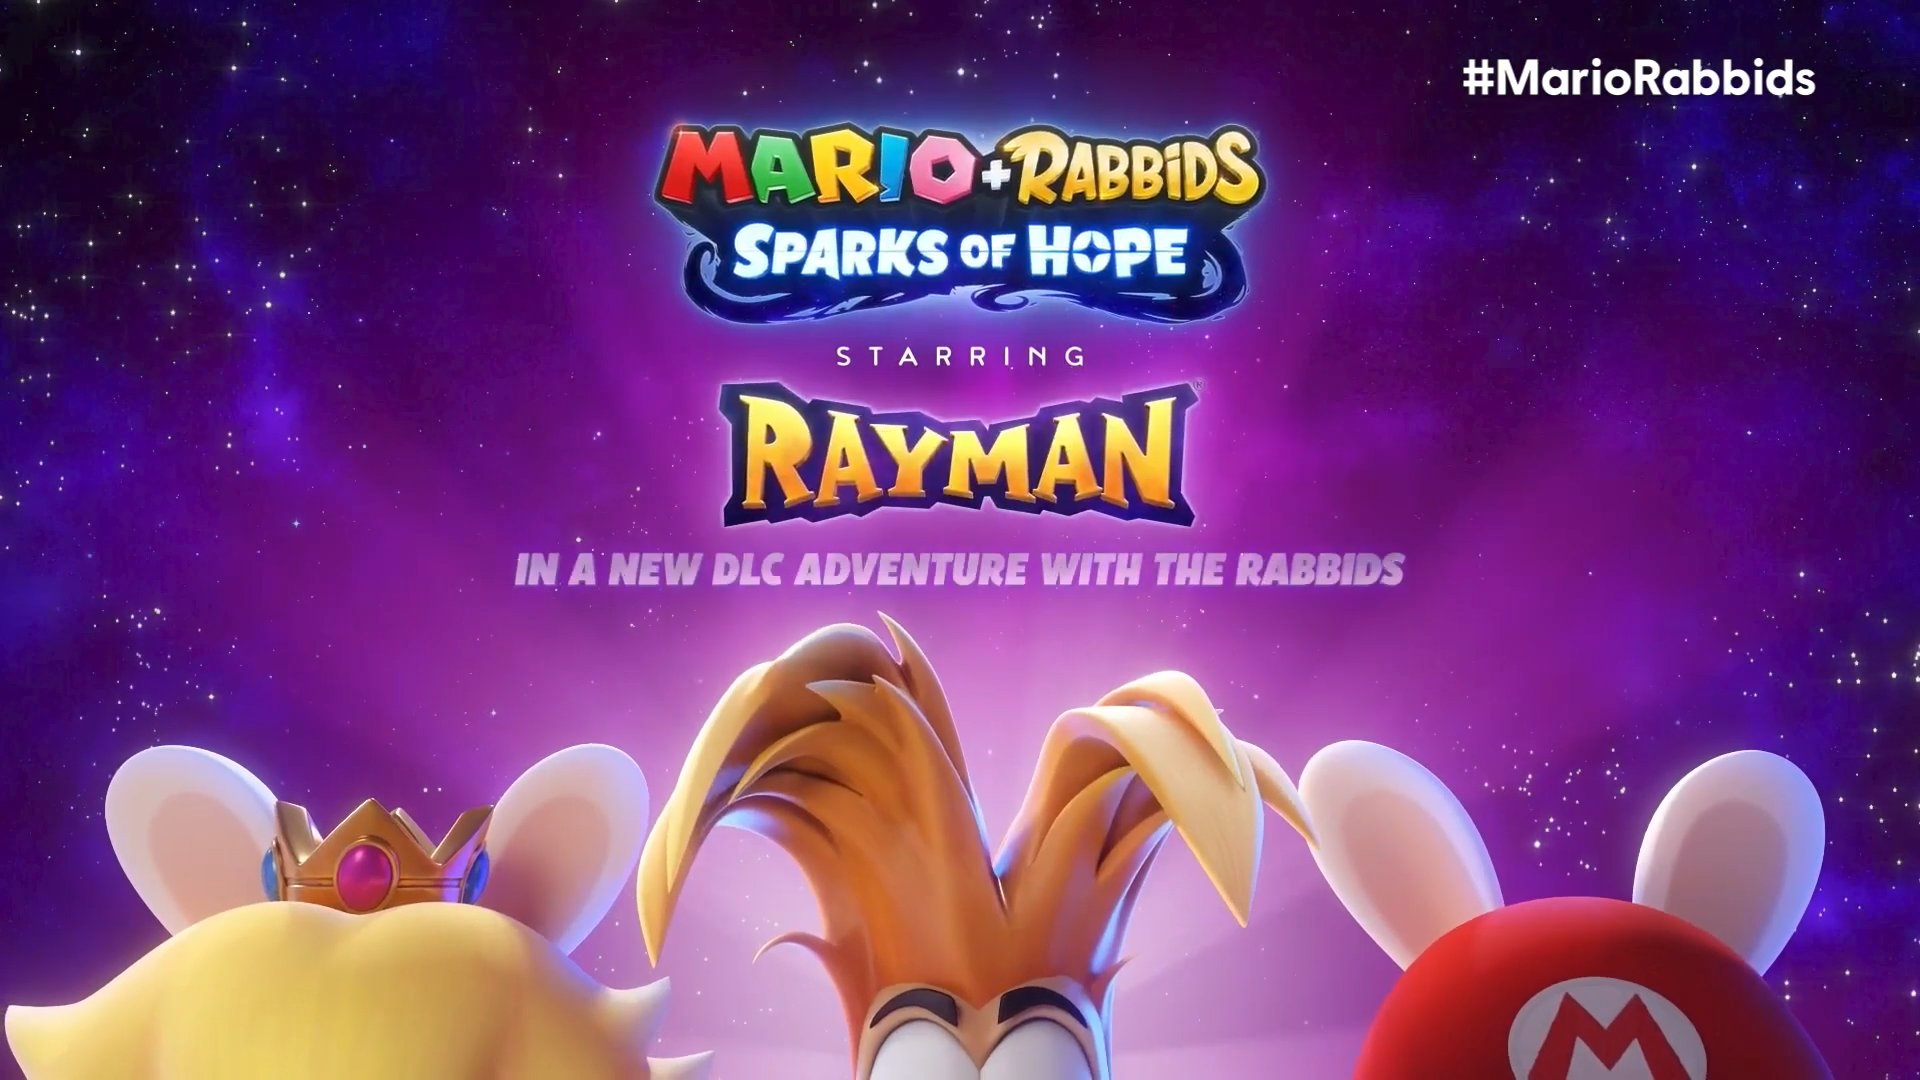 Mario + Rabbids Sparks of Hope (@mariorabbids) • Instagram photos and videos